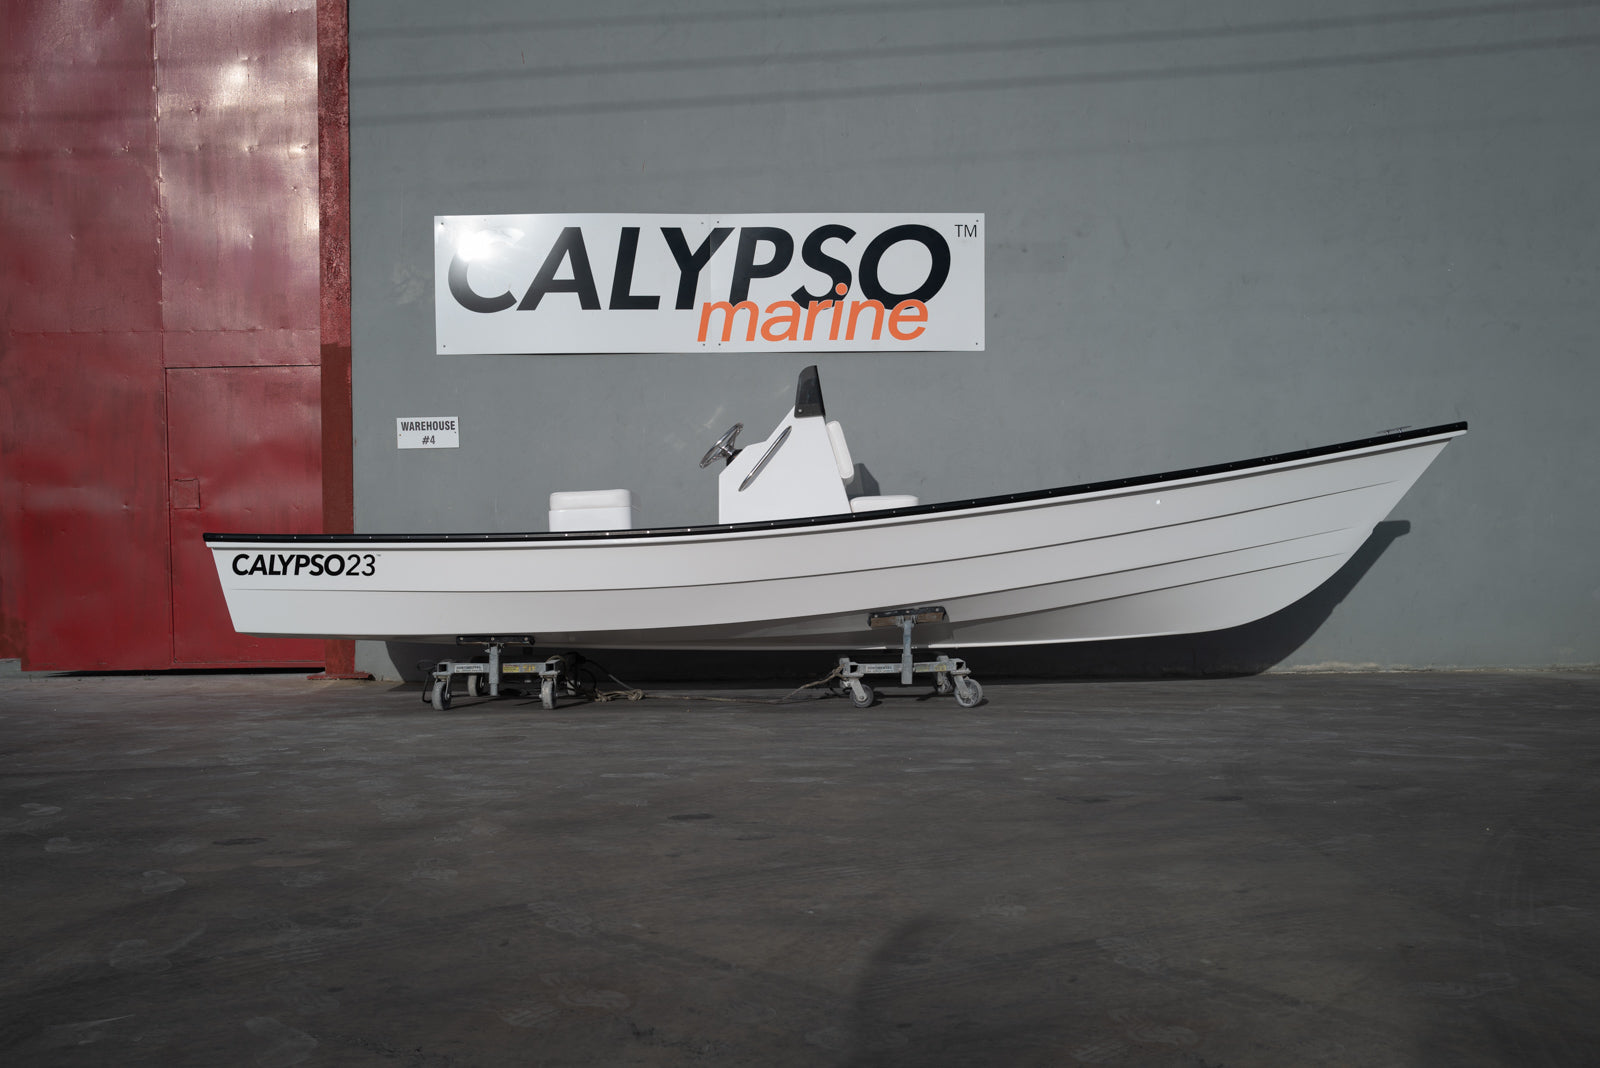 2022 CALYPSO23cx starts shipping to Calypso Dealers!